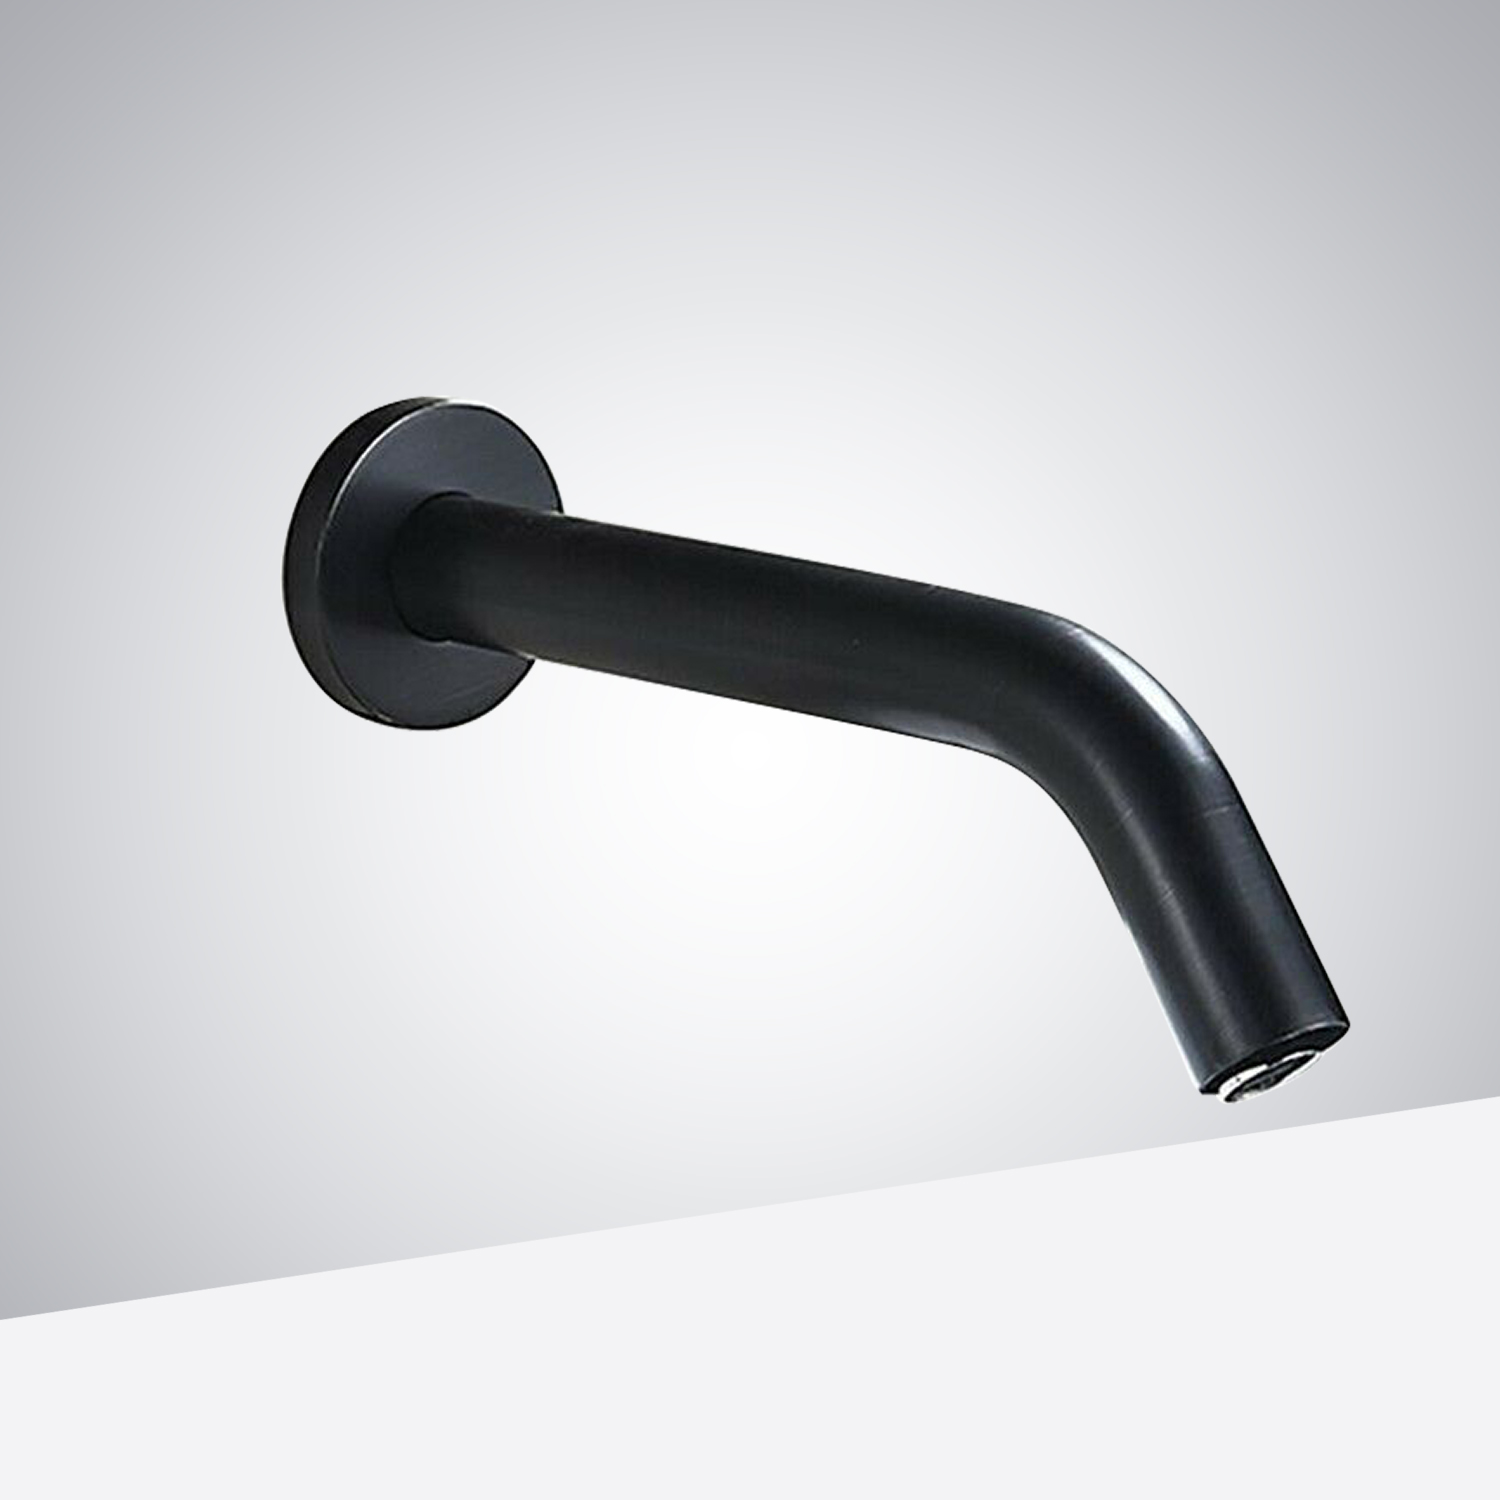 Chrome/Black Wall Mounted Hands Free Automatic Sensor Tap Bathroom Mixer Faucet 